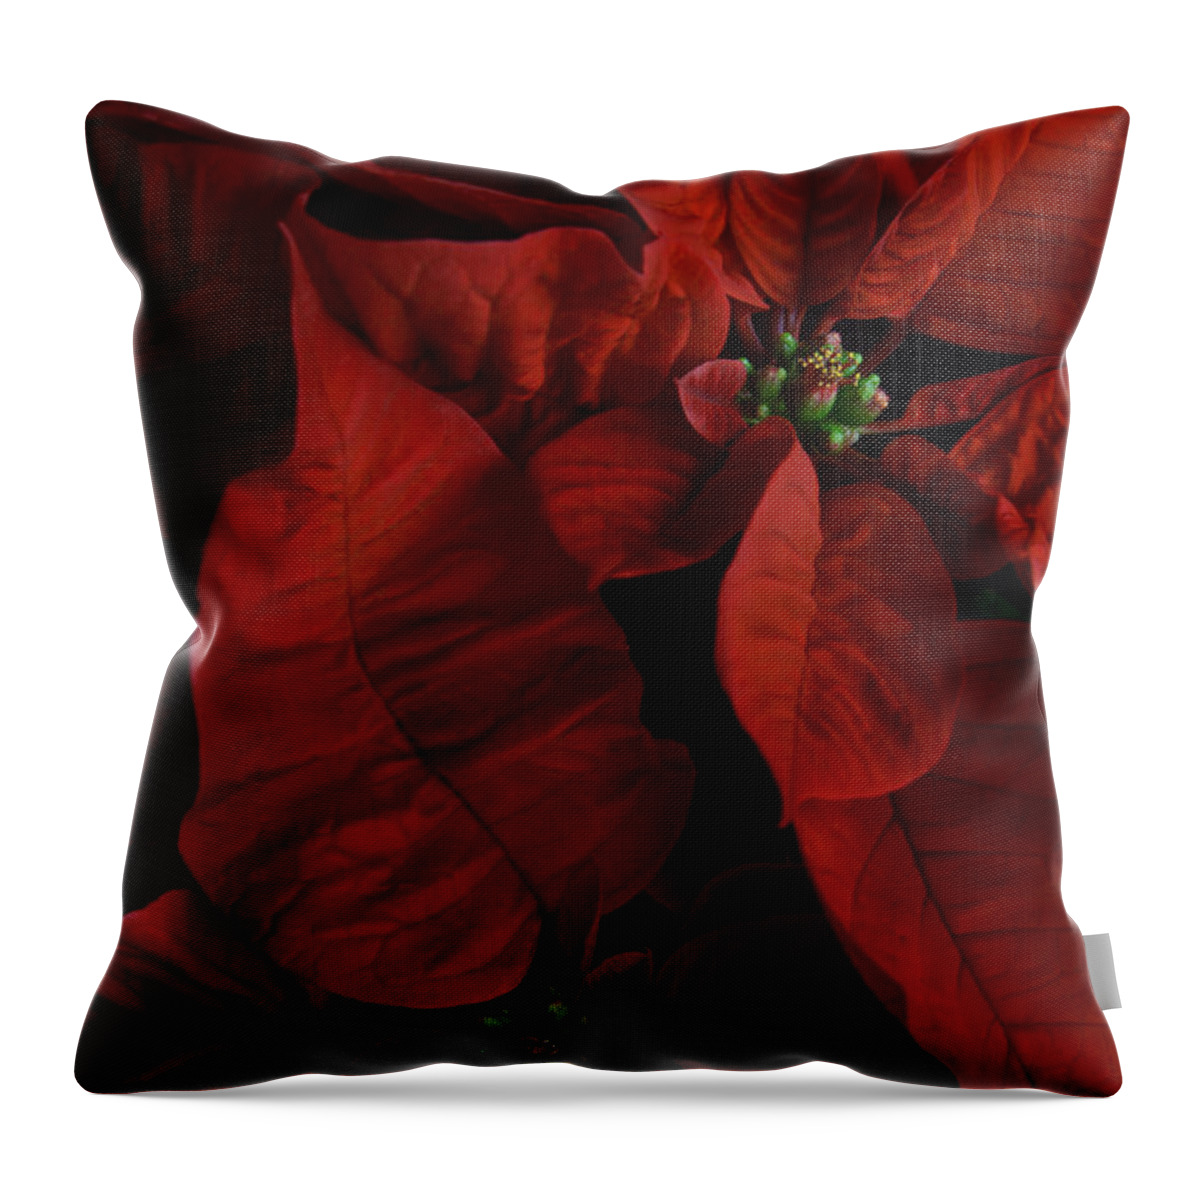 Euphorbia Pulcherrima Throw Pillow featuring the photograph Red Poinsettia by Ann Garrett